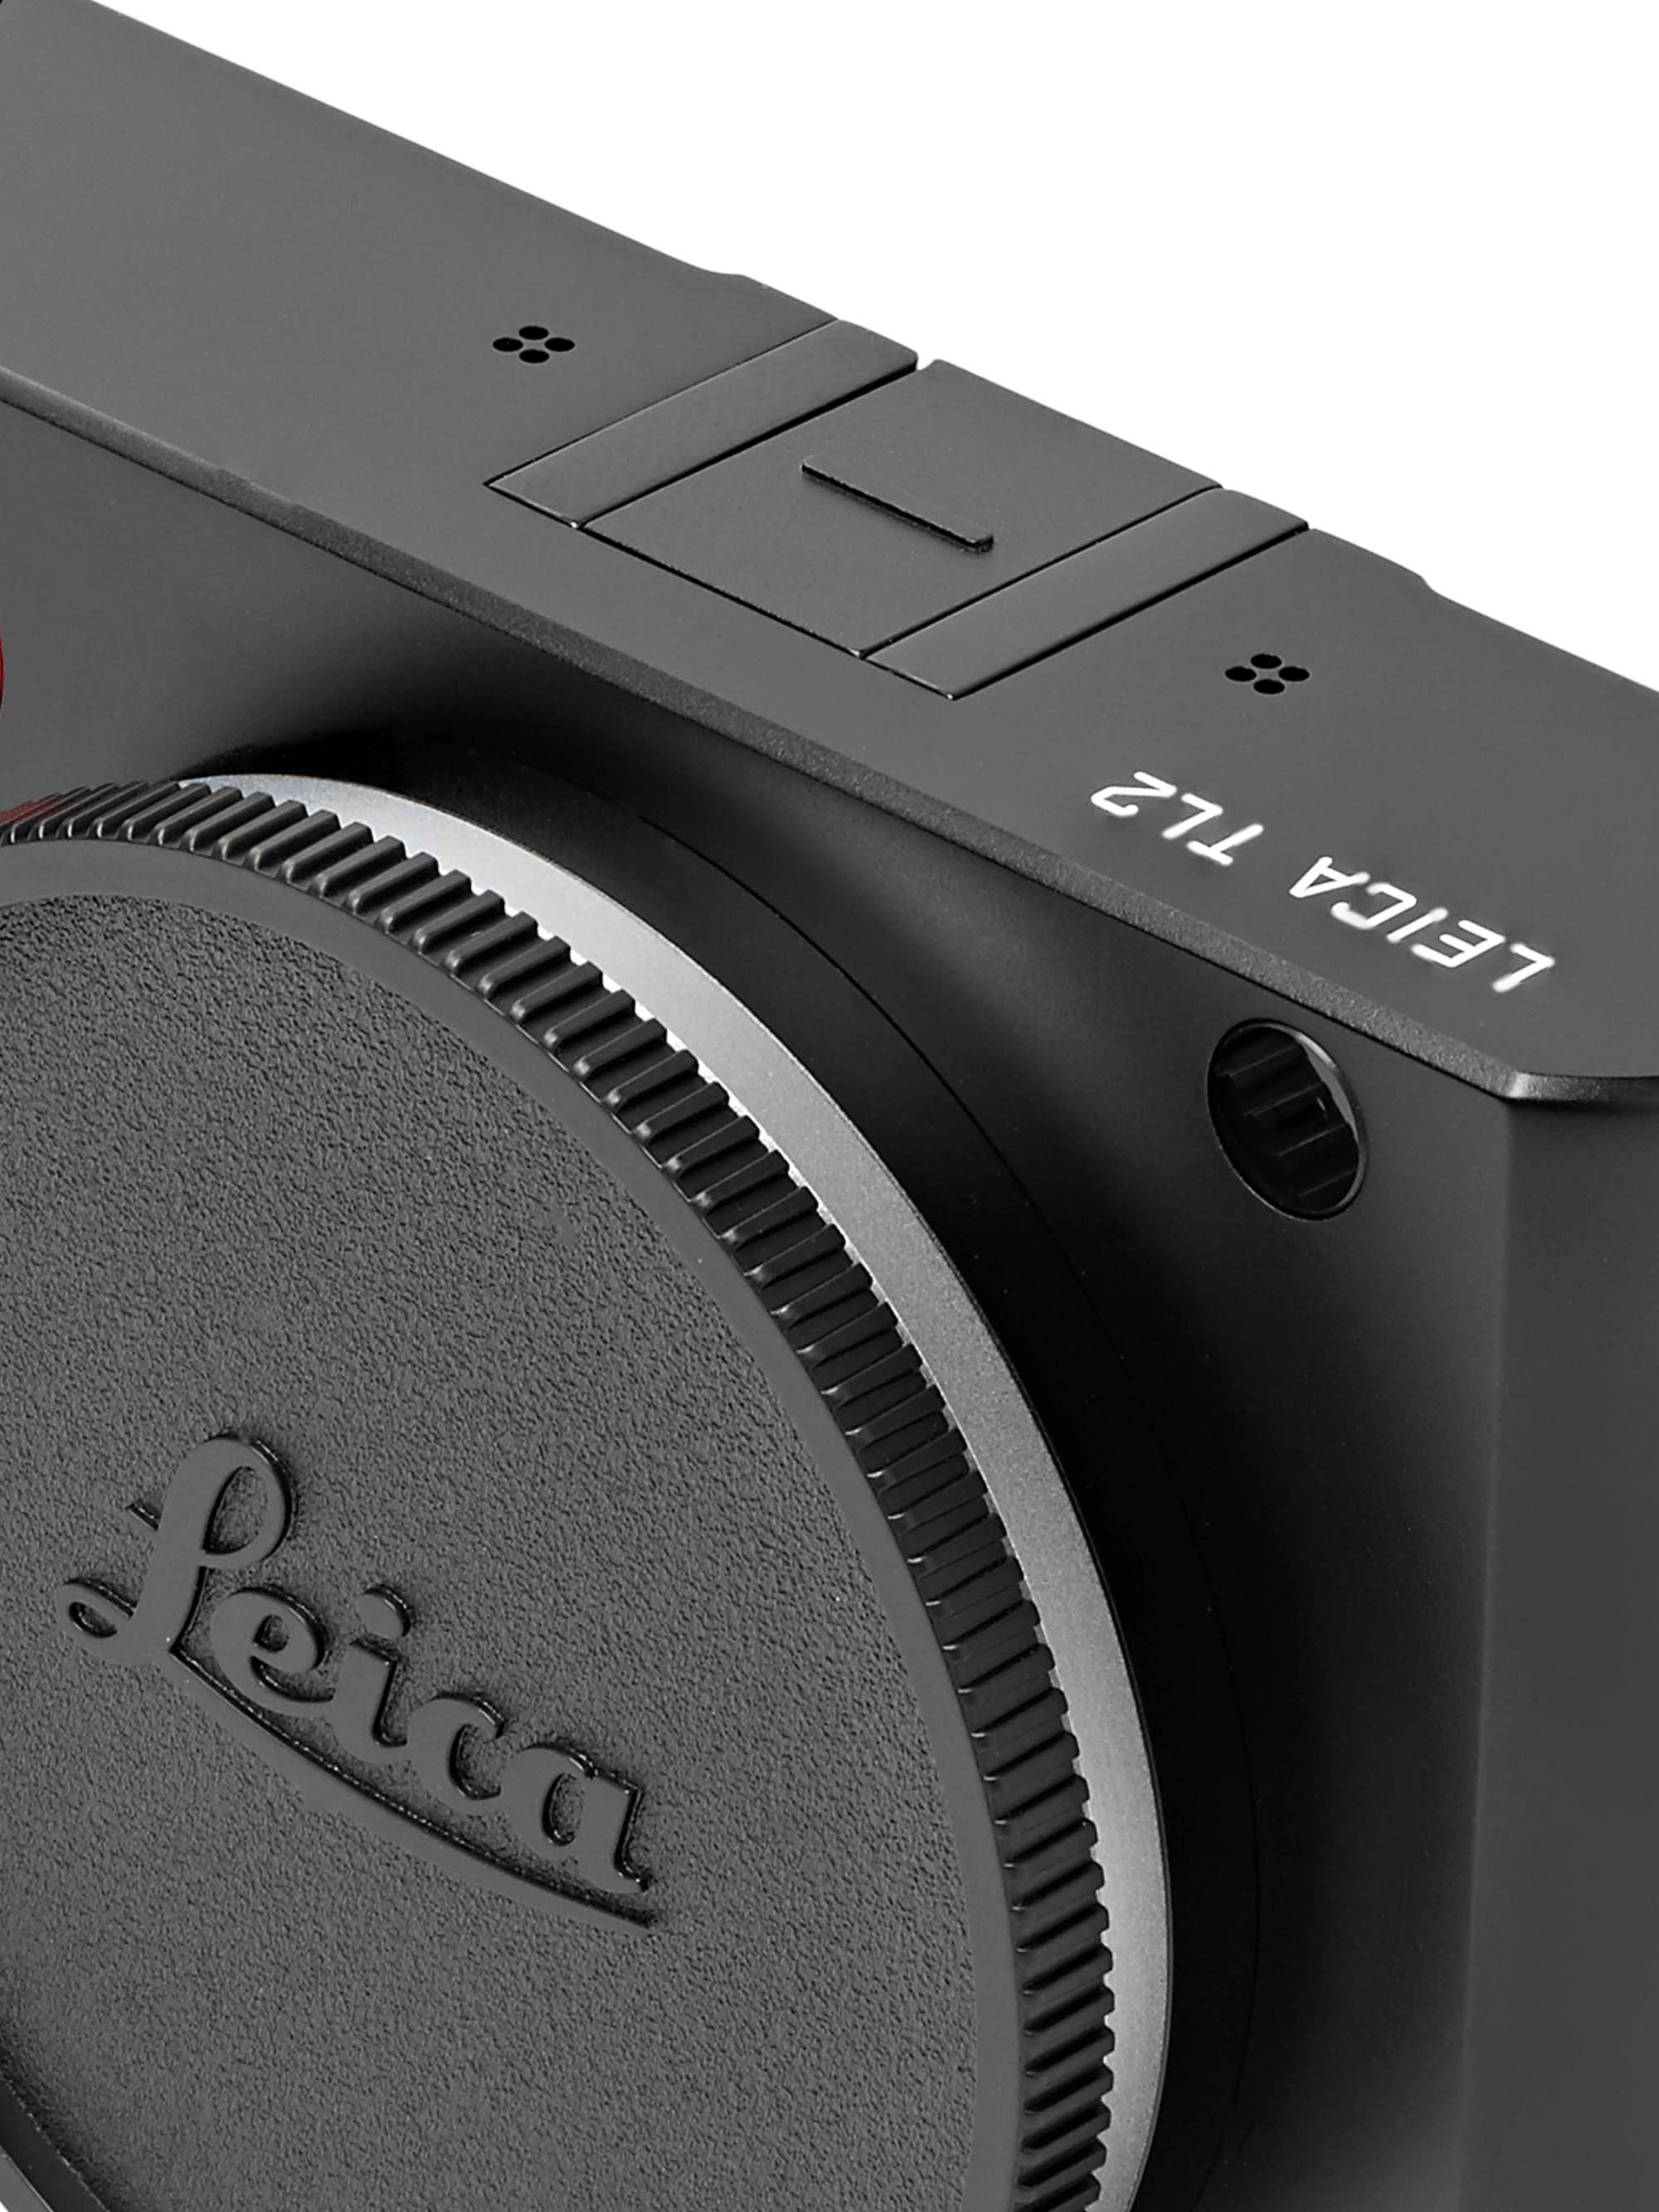 LEICA TL2 System Digital Camera